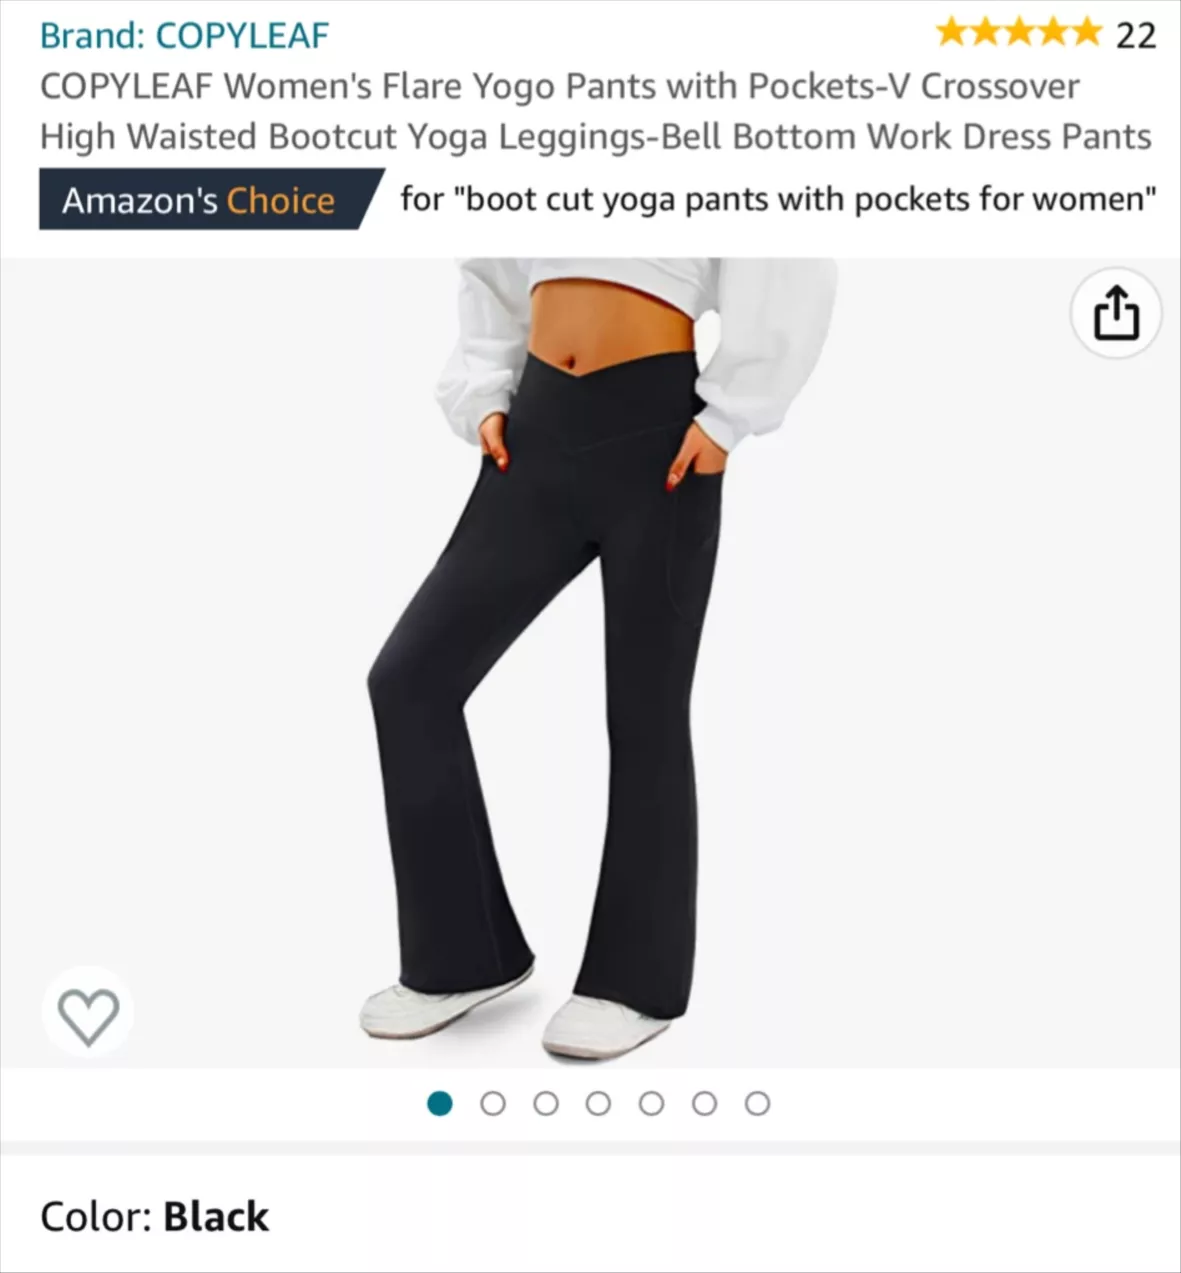 COPYLEAF Women's Flare Yoga Pants with Pockets-V Crossover